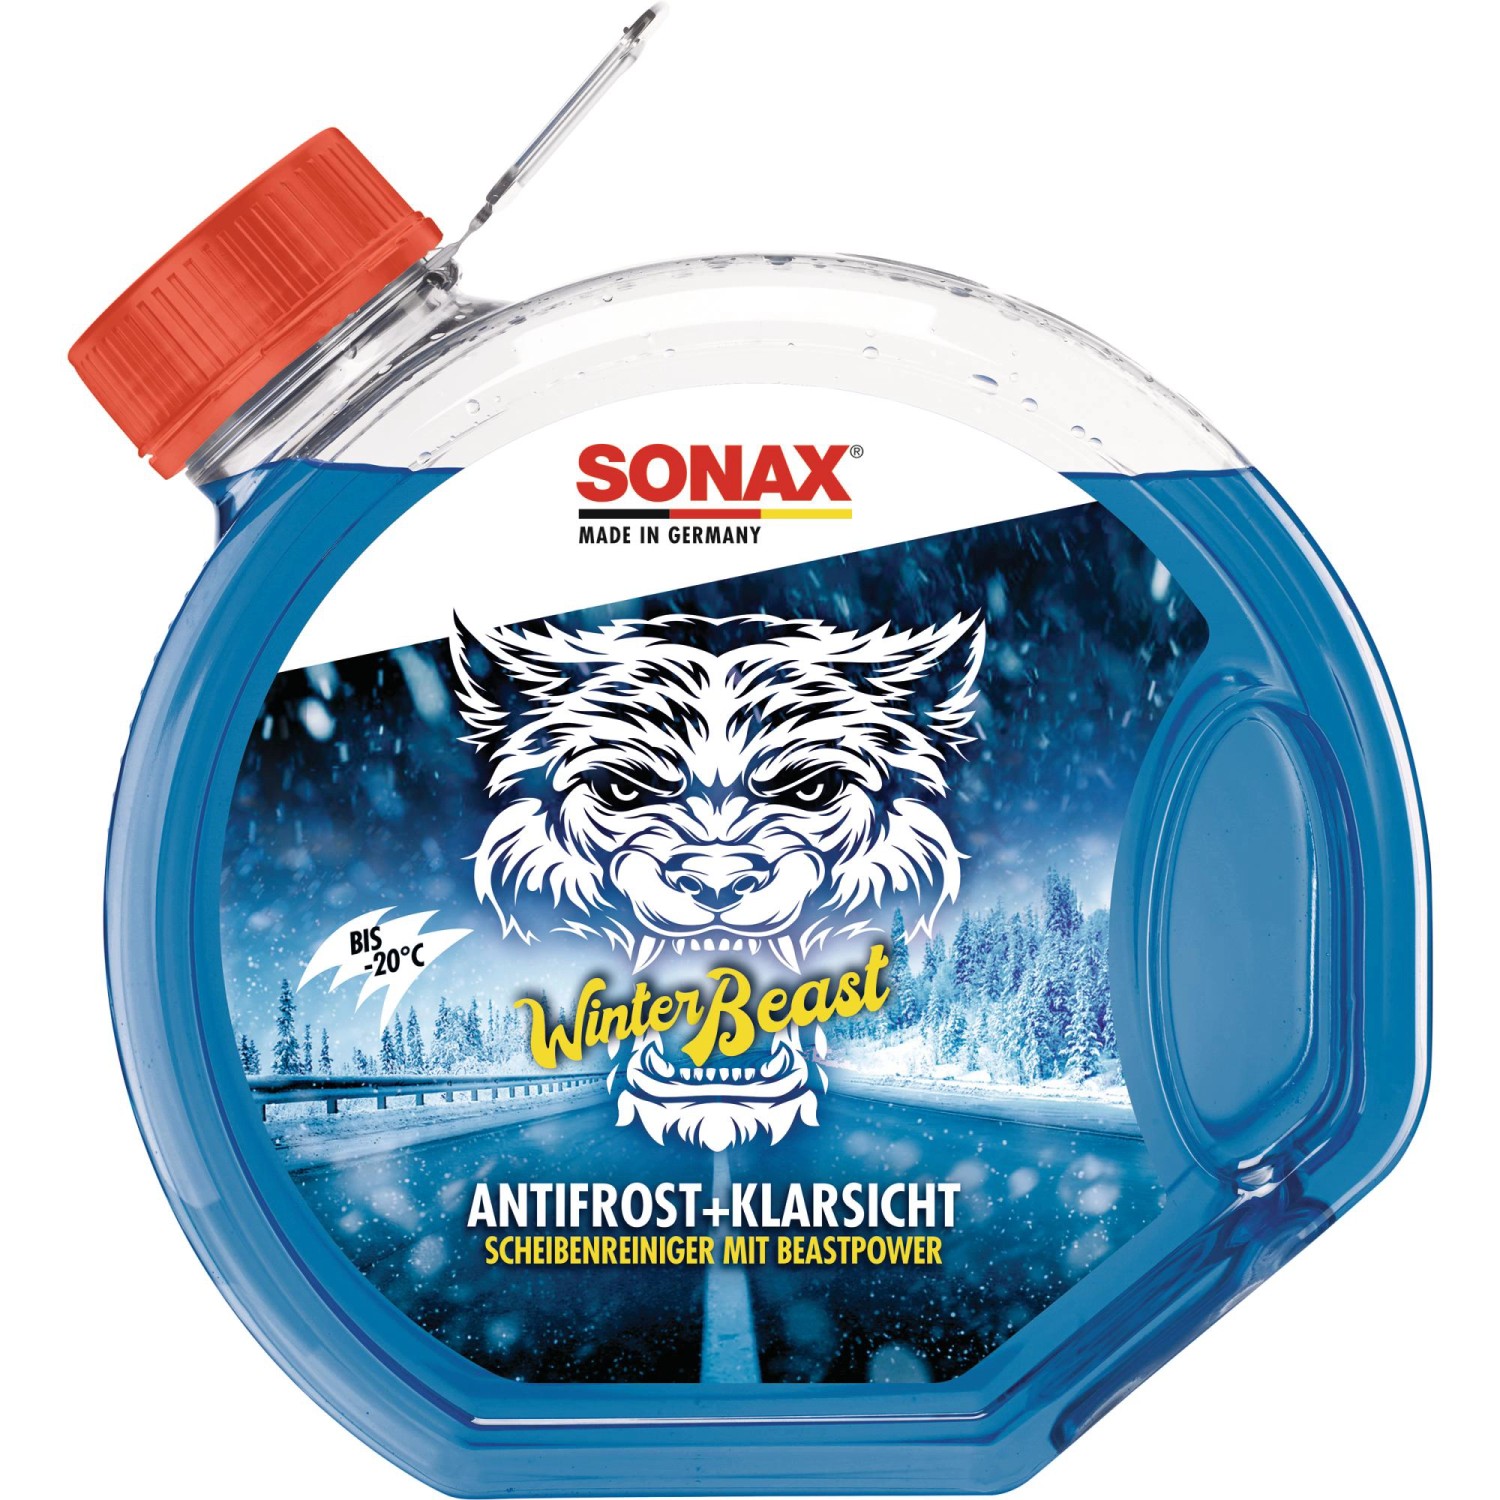 Sonax Winterbeast Antifrost+Klarsicht, gebrauchsfertig, 5L